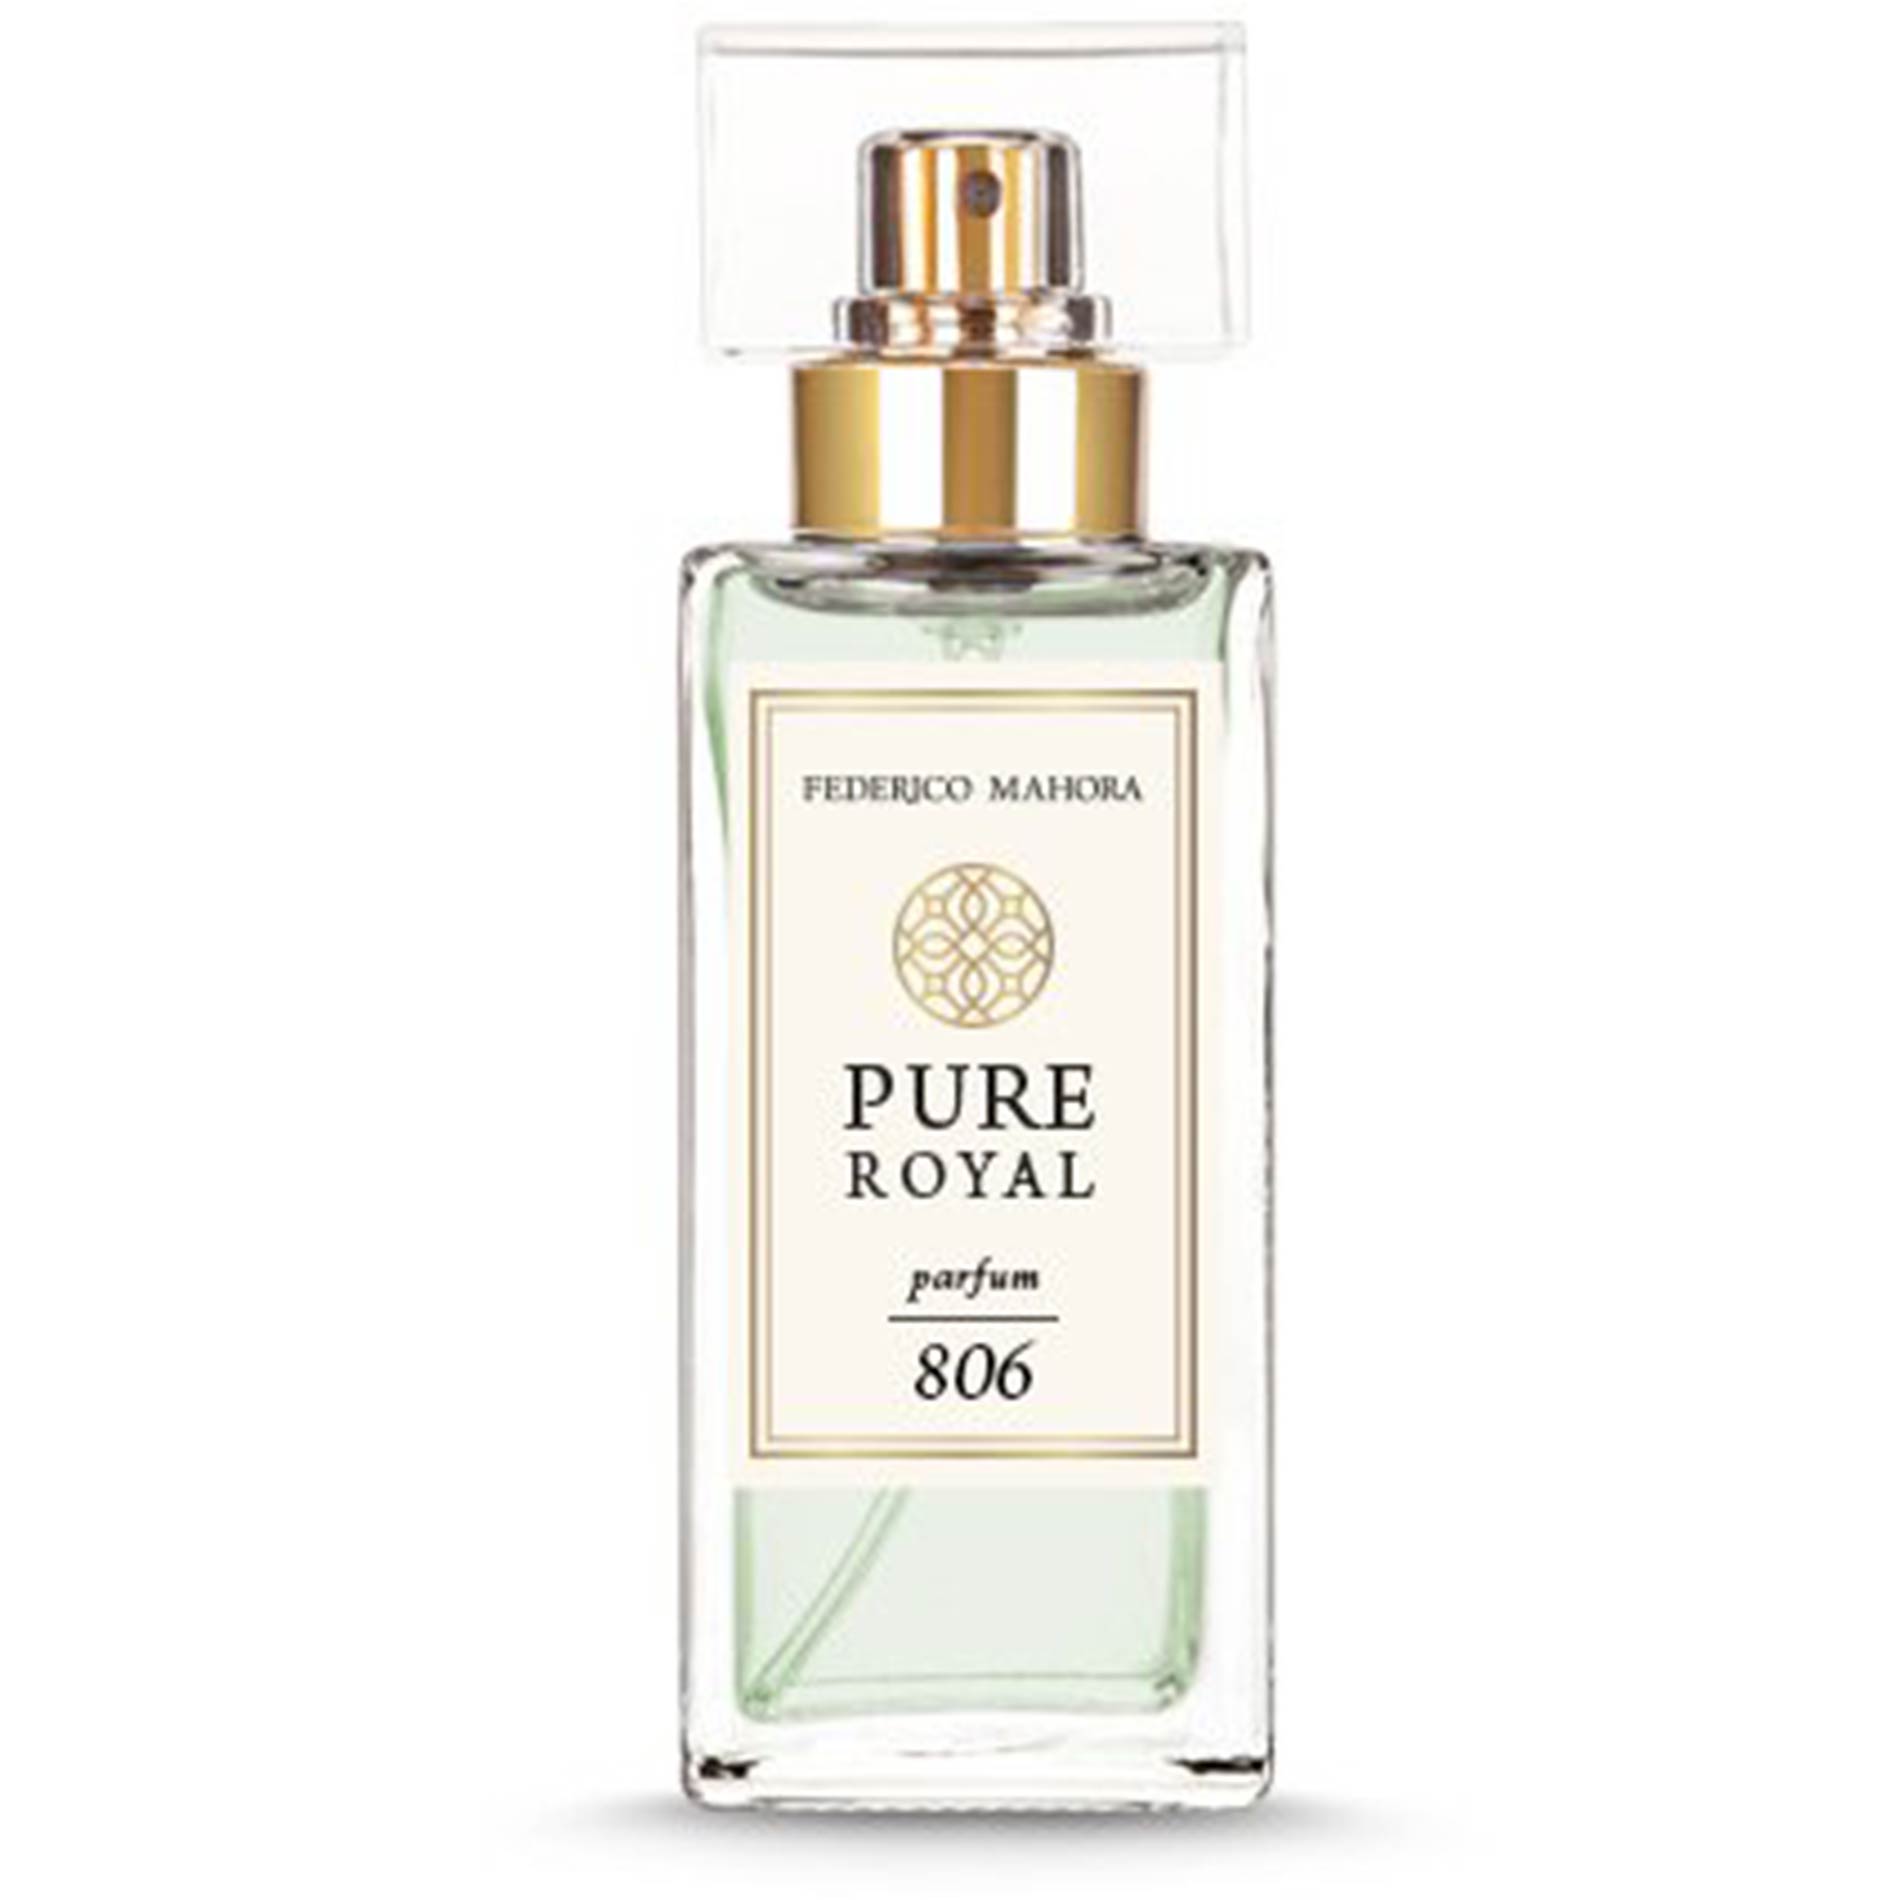 PURE ROYAL 806 Parfum by Federico Mahora